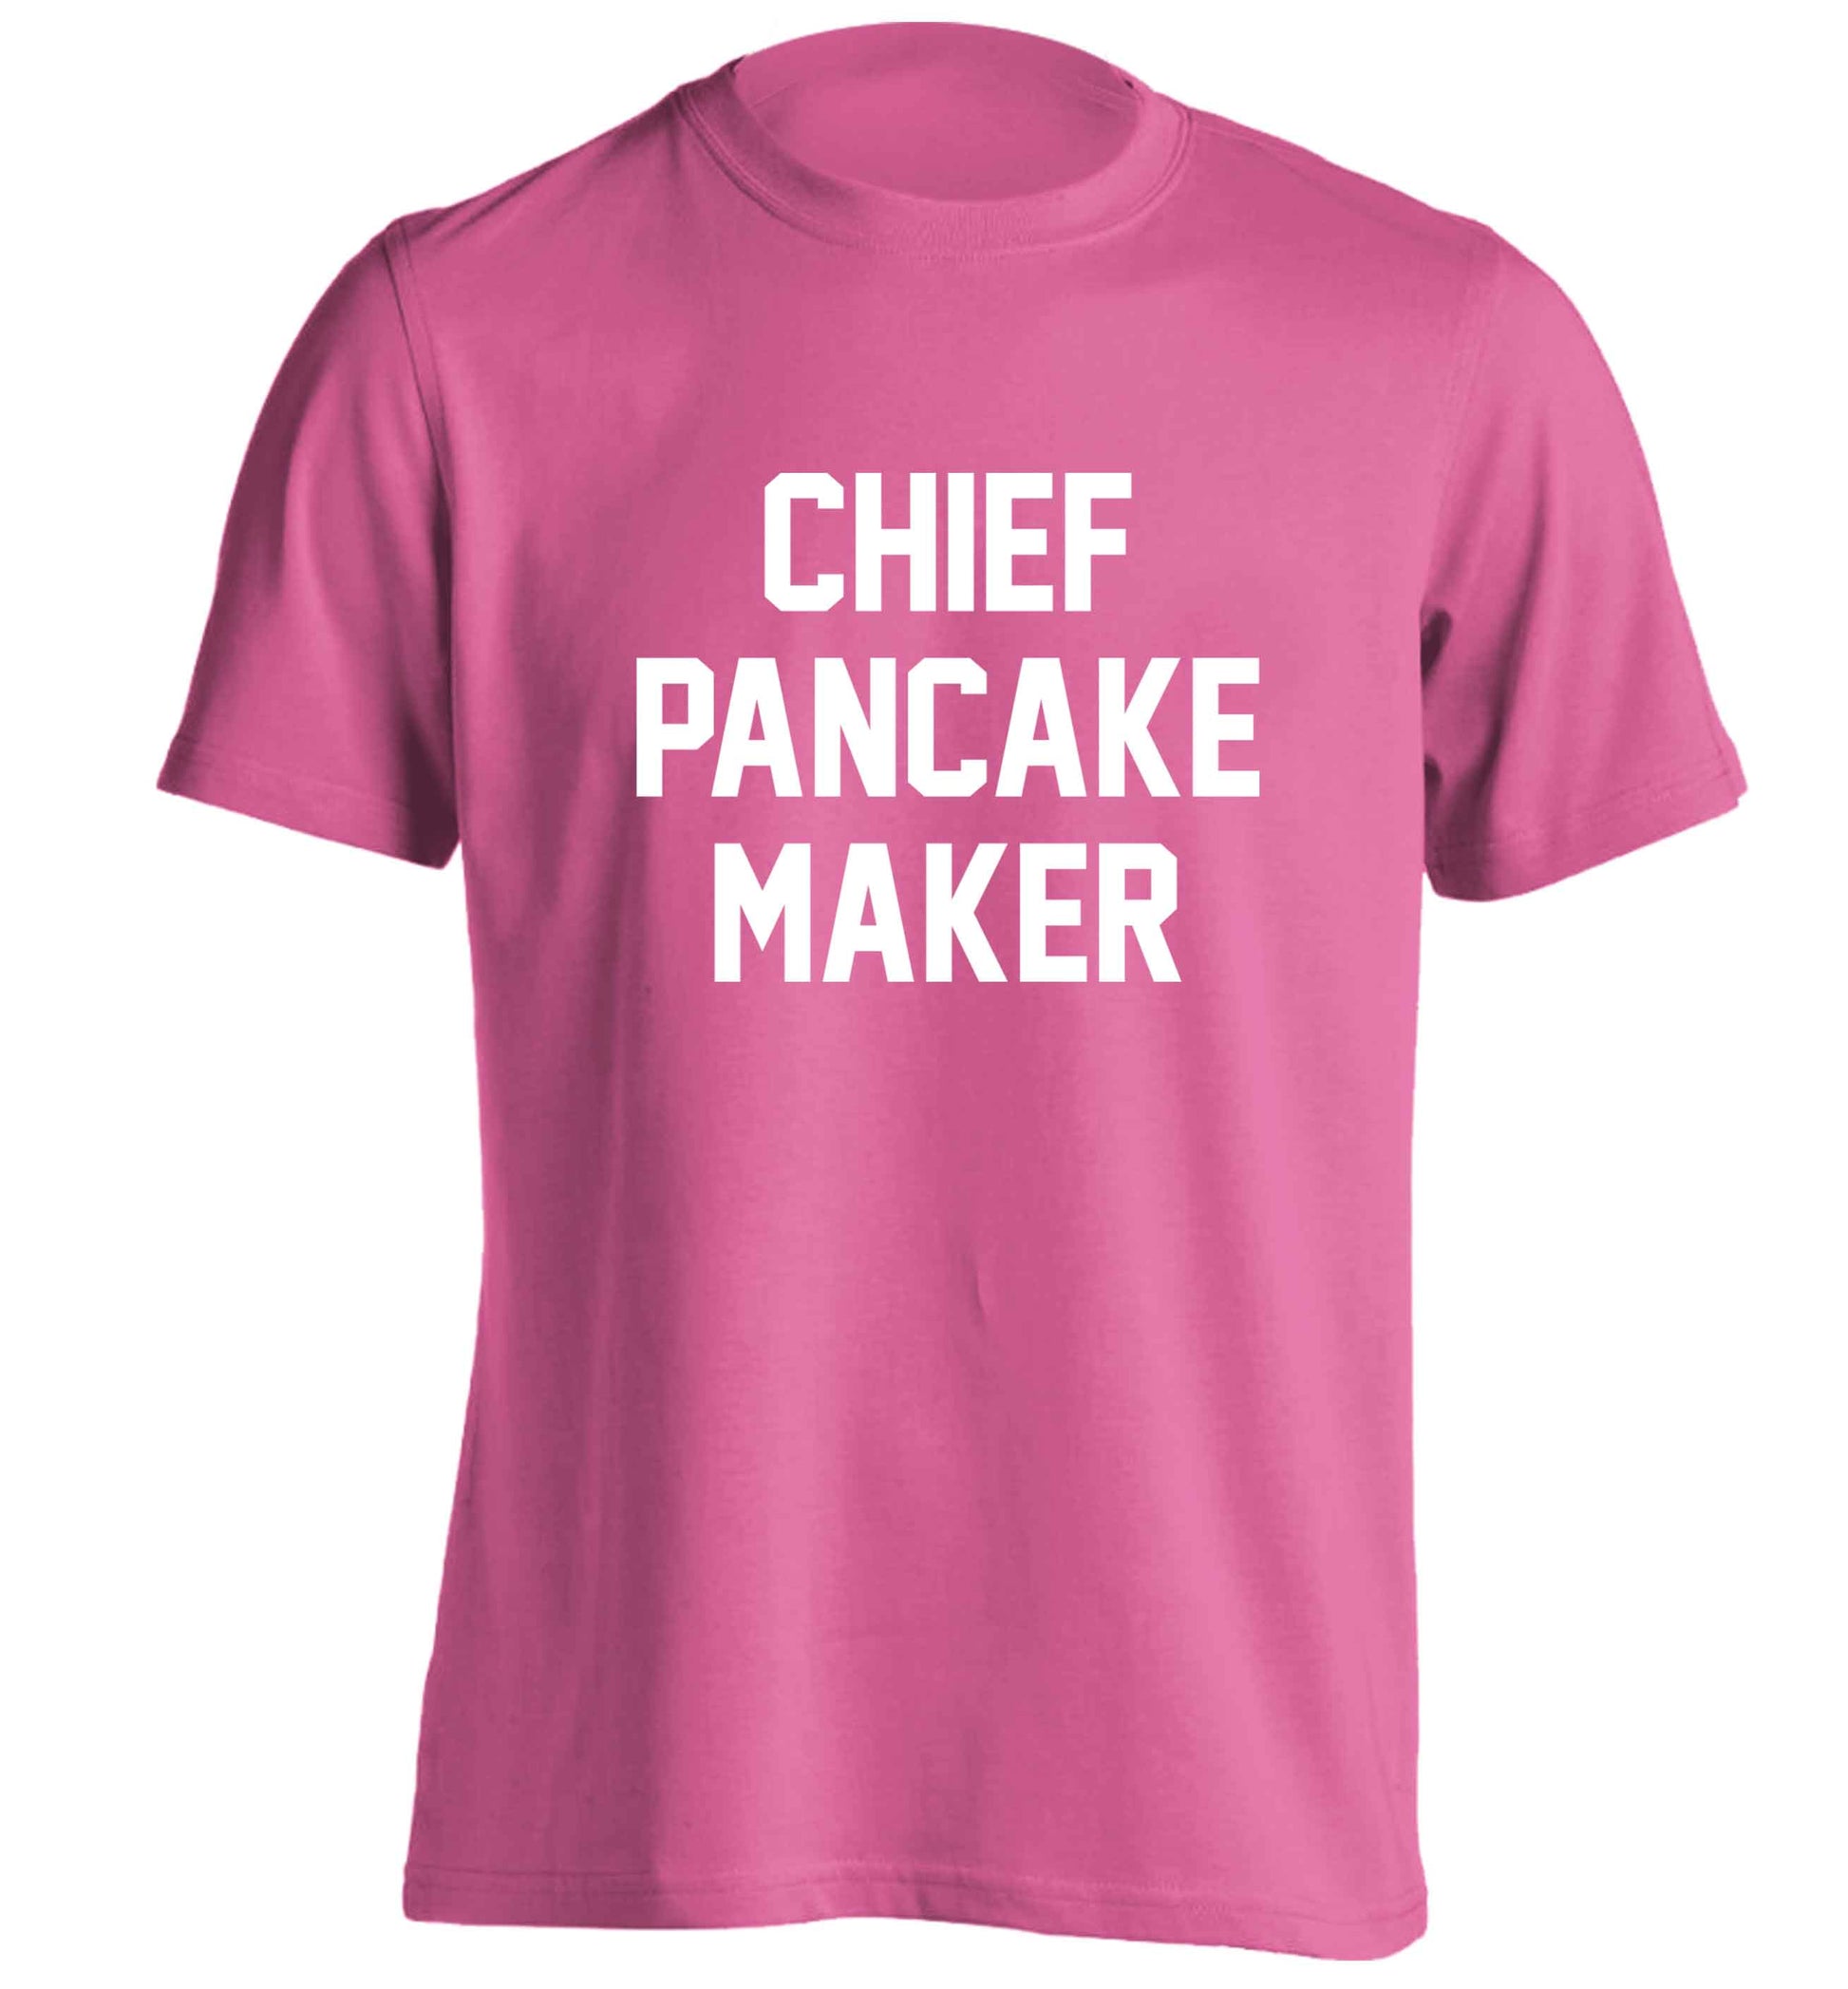 Chief pancake maker adults unisex pink Tshirt 2XL